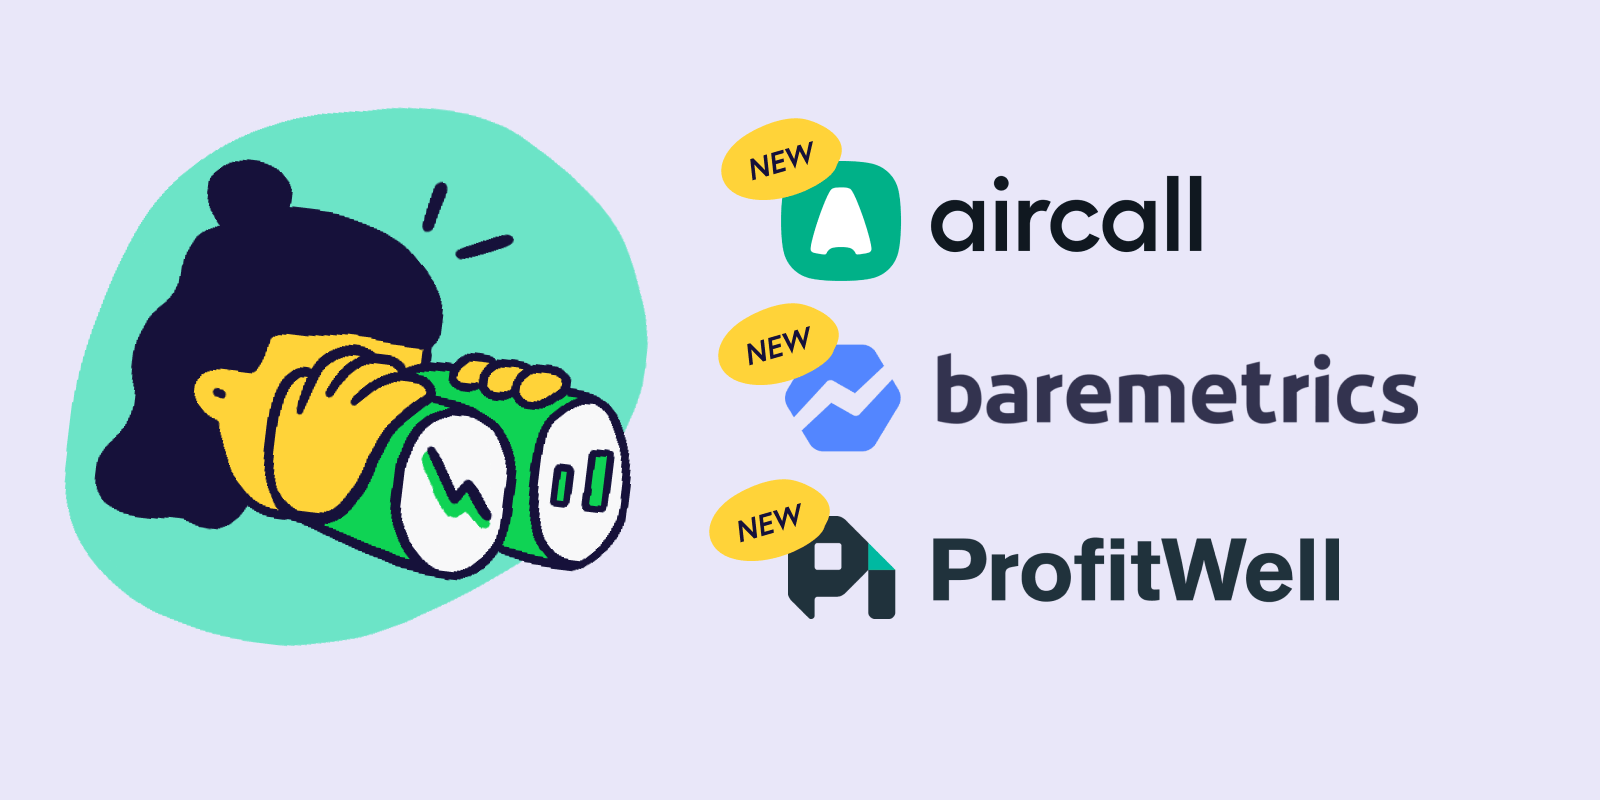 New-profelwell-aircall-baremetrics.png